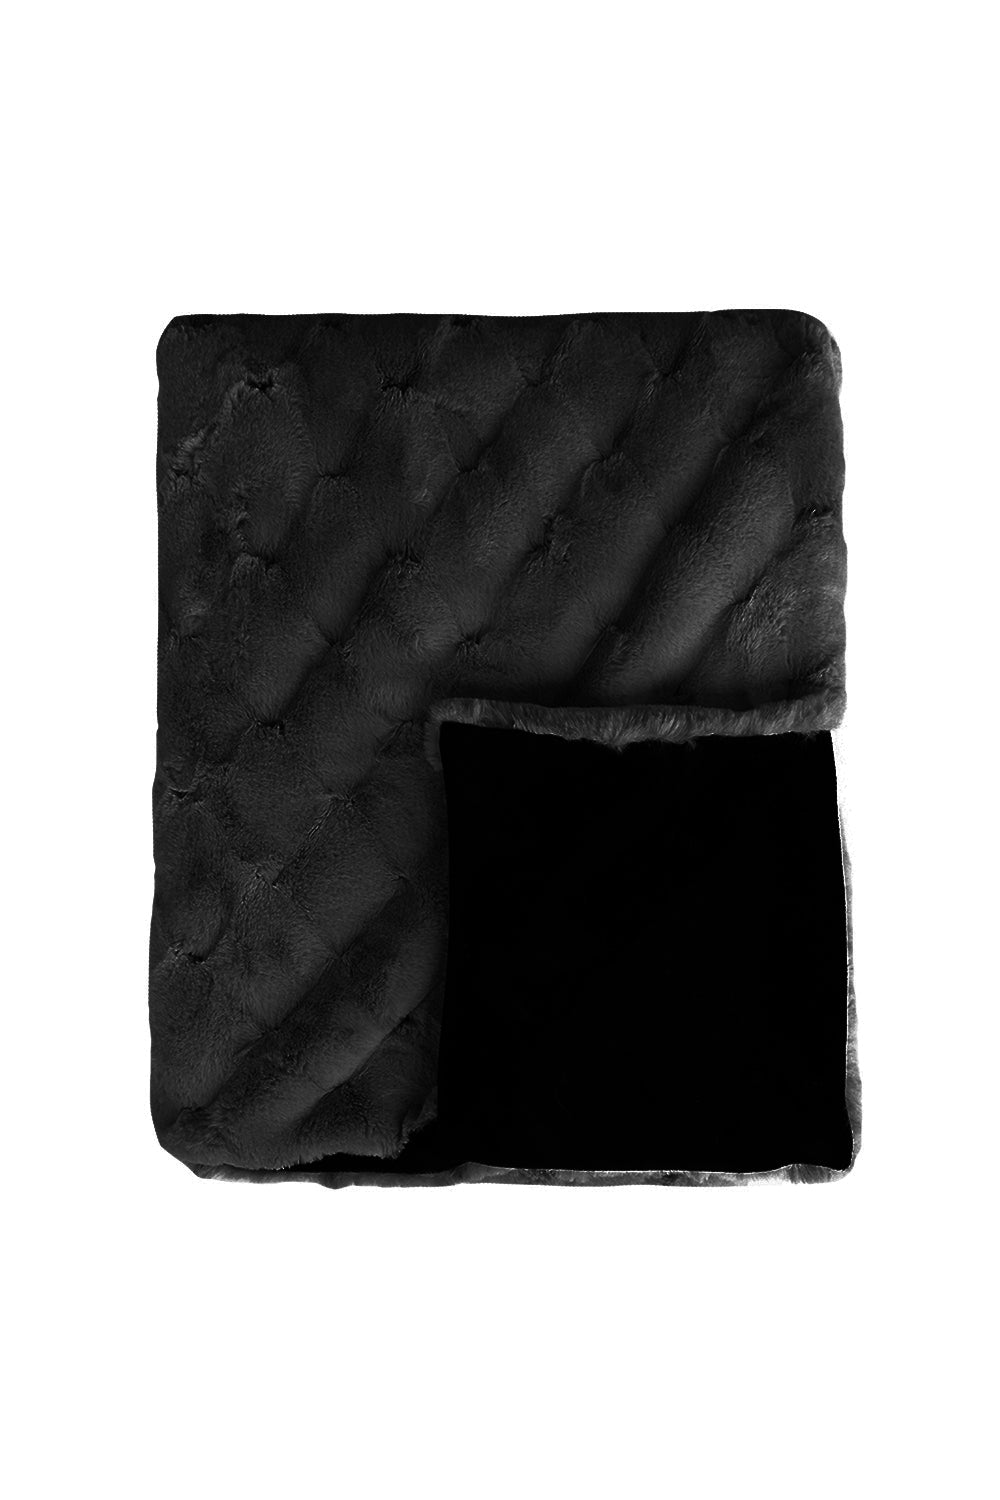 Luxury imitation fur throw, Valentina Black from Heirloom Furs with matching cushions  SKU FVABT18